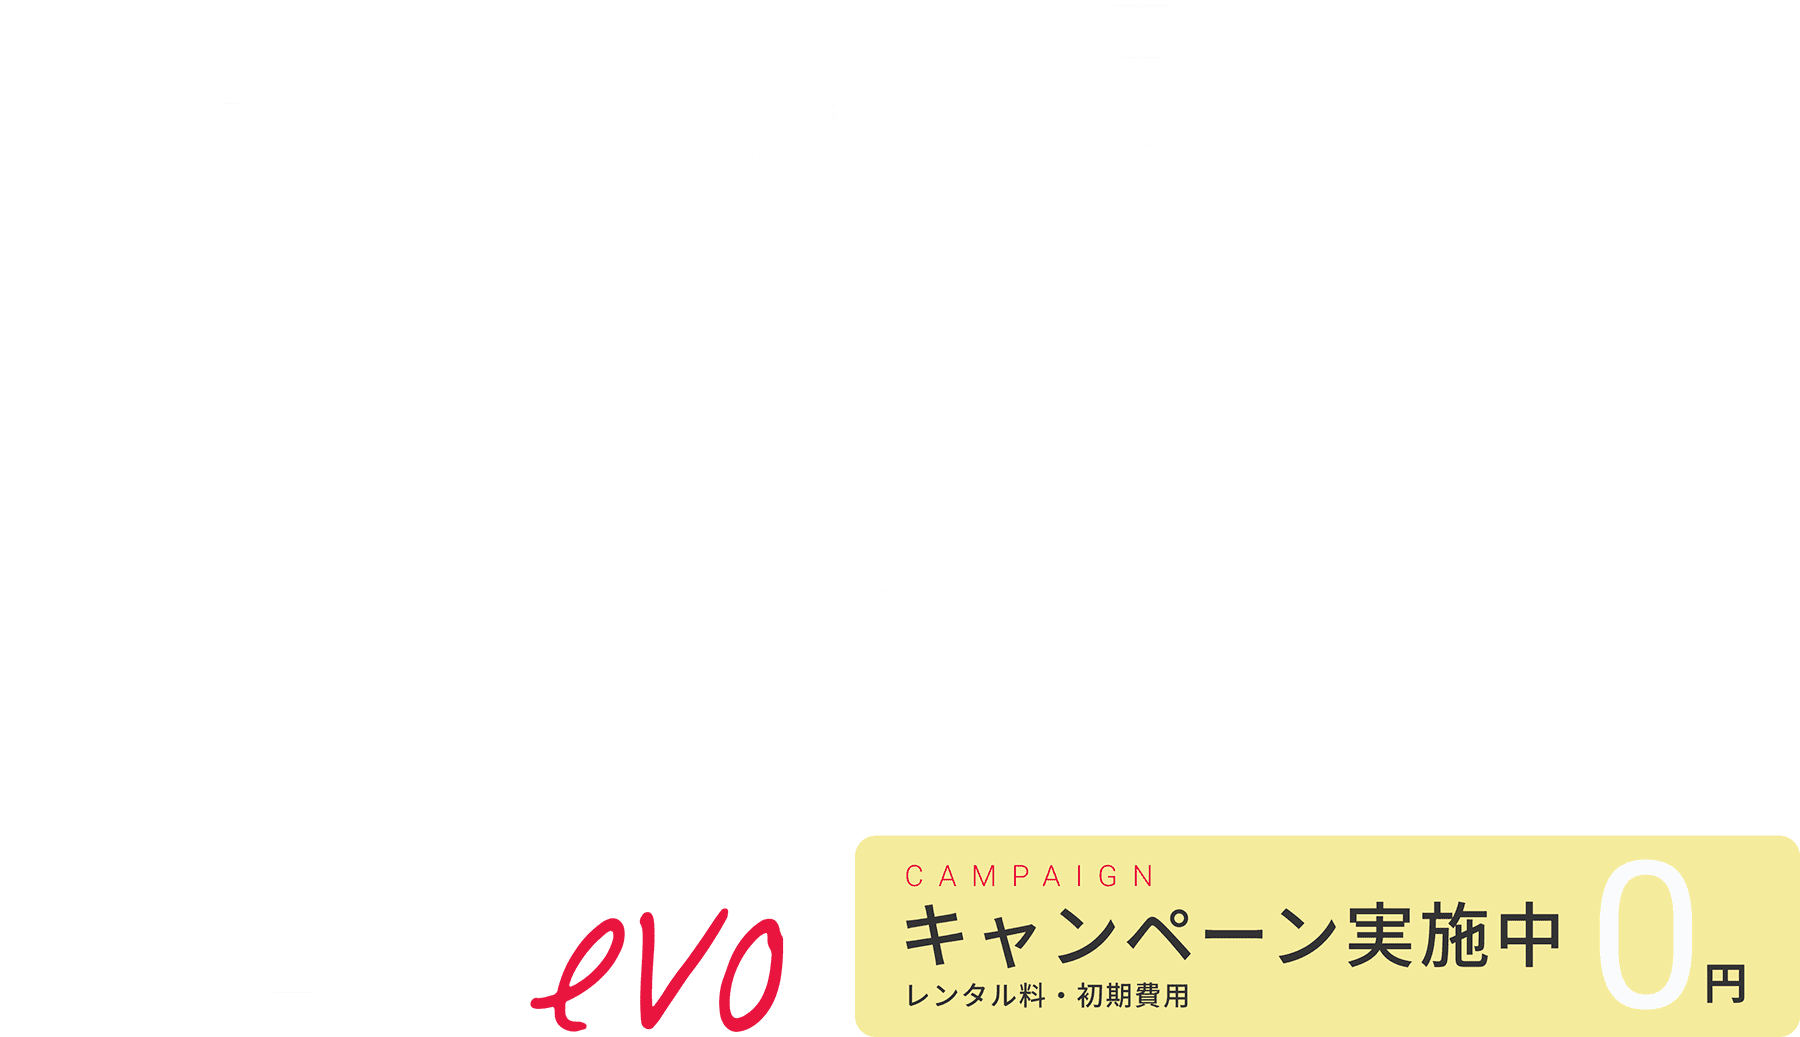 LOHASUIは美味しい富士山の天然水を安全に皆さまのもとへお届けします。IT FOR YOU FROM Mt. FUJI LOHASUI LOHASTYLE SLIM & STYLISH ウォーターサーバー LOHASUI evo CAMPAIGN キャンペーン実施中 レンタル料・初期費用 0円